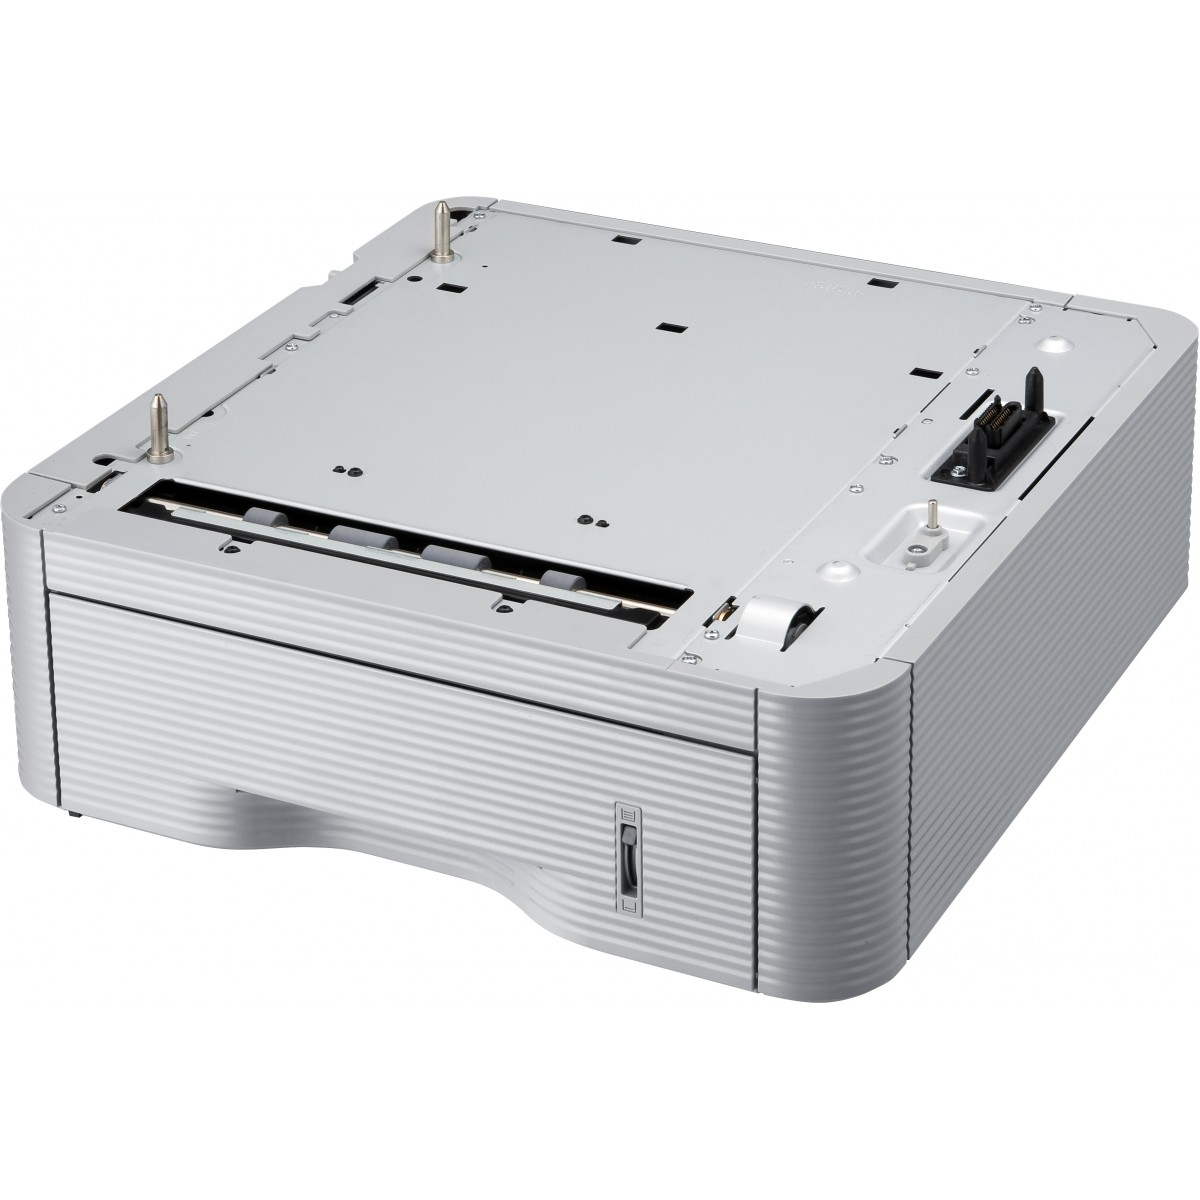 HP ML-S5010A - Multi-Purpose tray - Samsung - ML-4510ND - 520 sheets - White